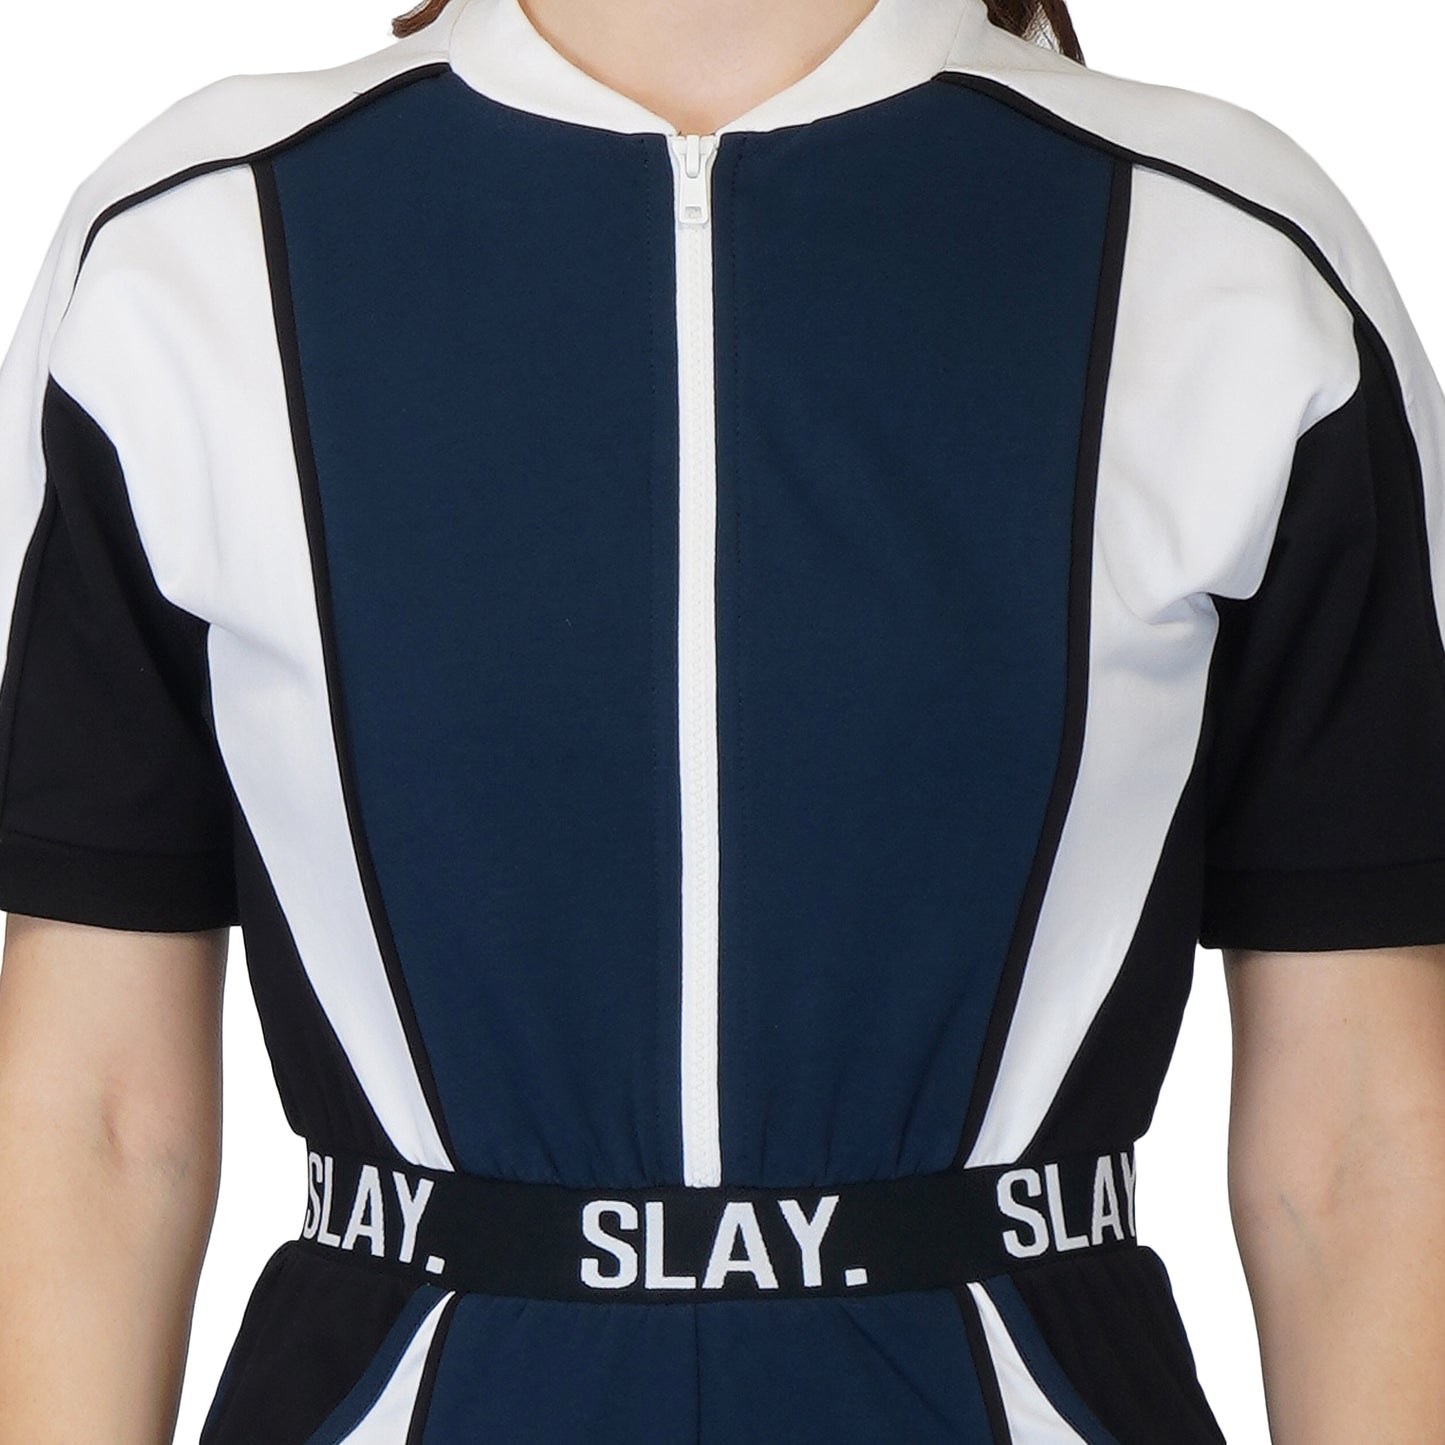 SLAY. Women's Colorblock Romper Blue Black White